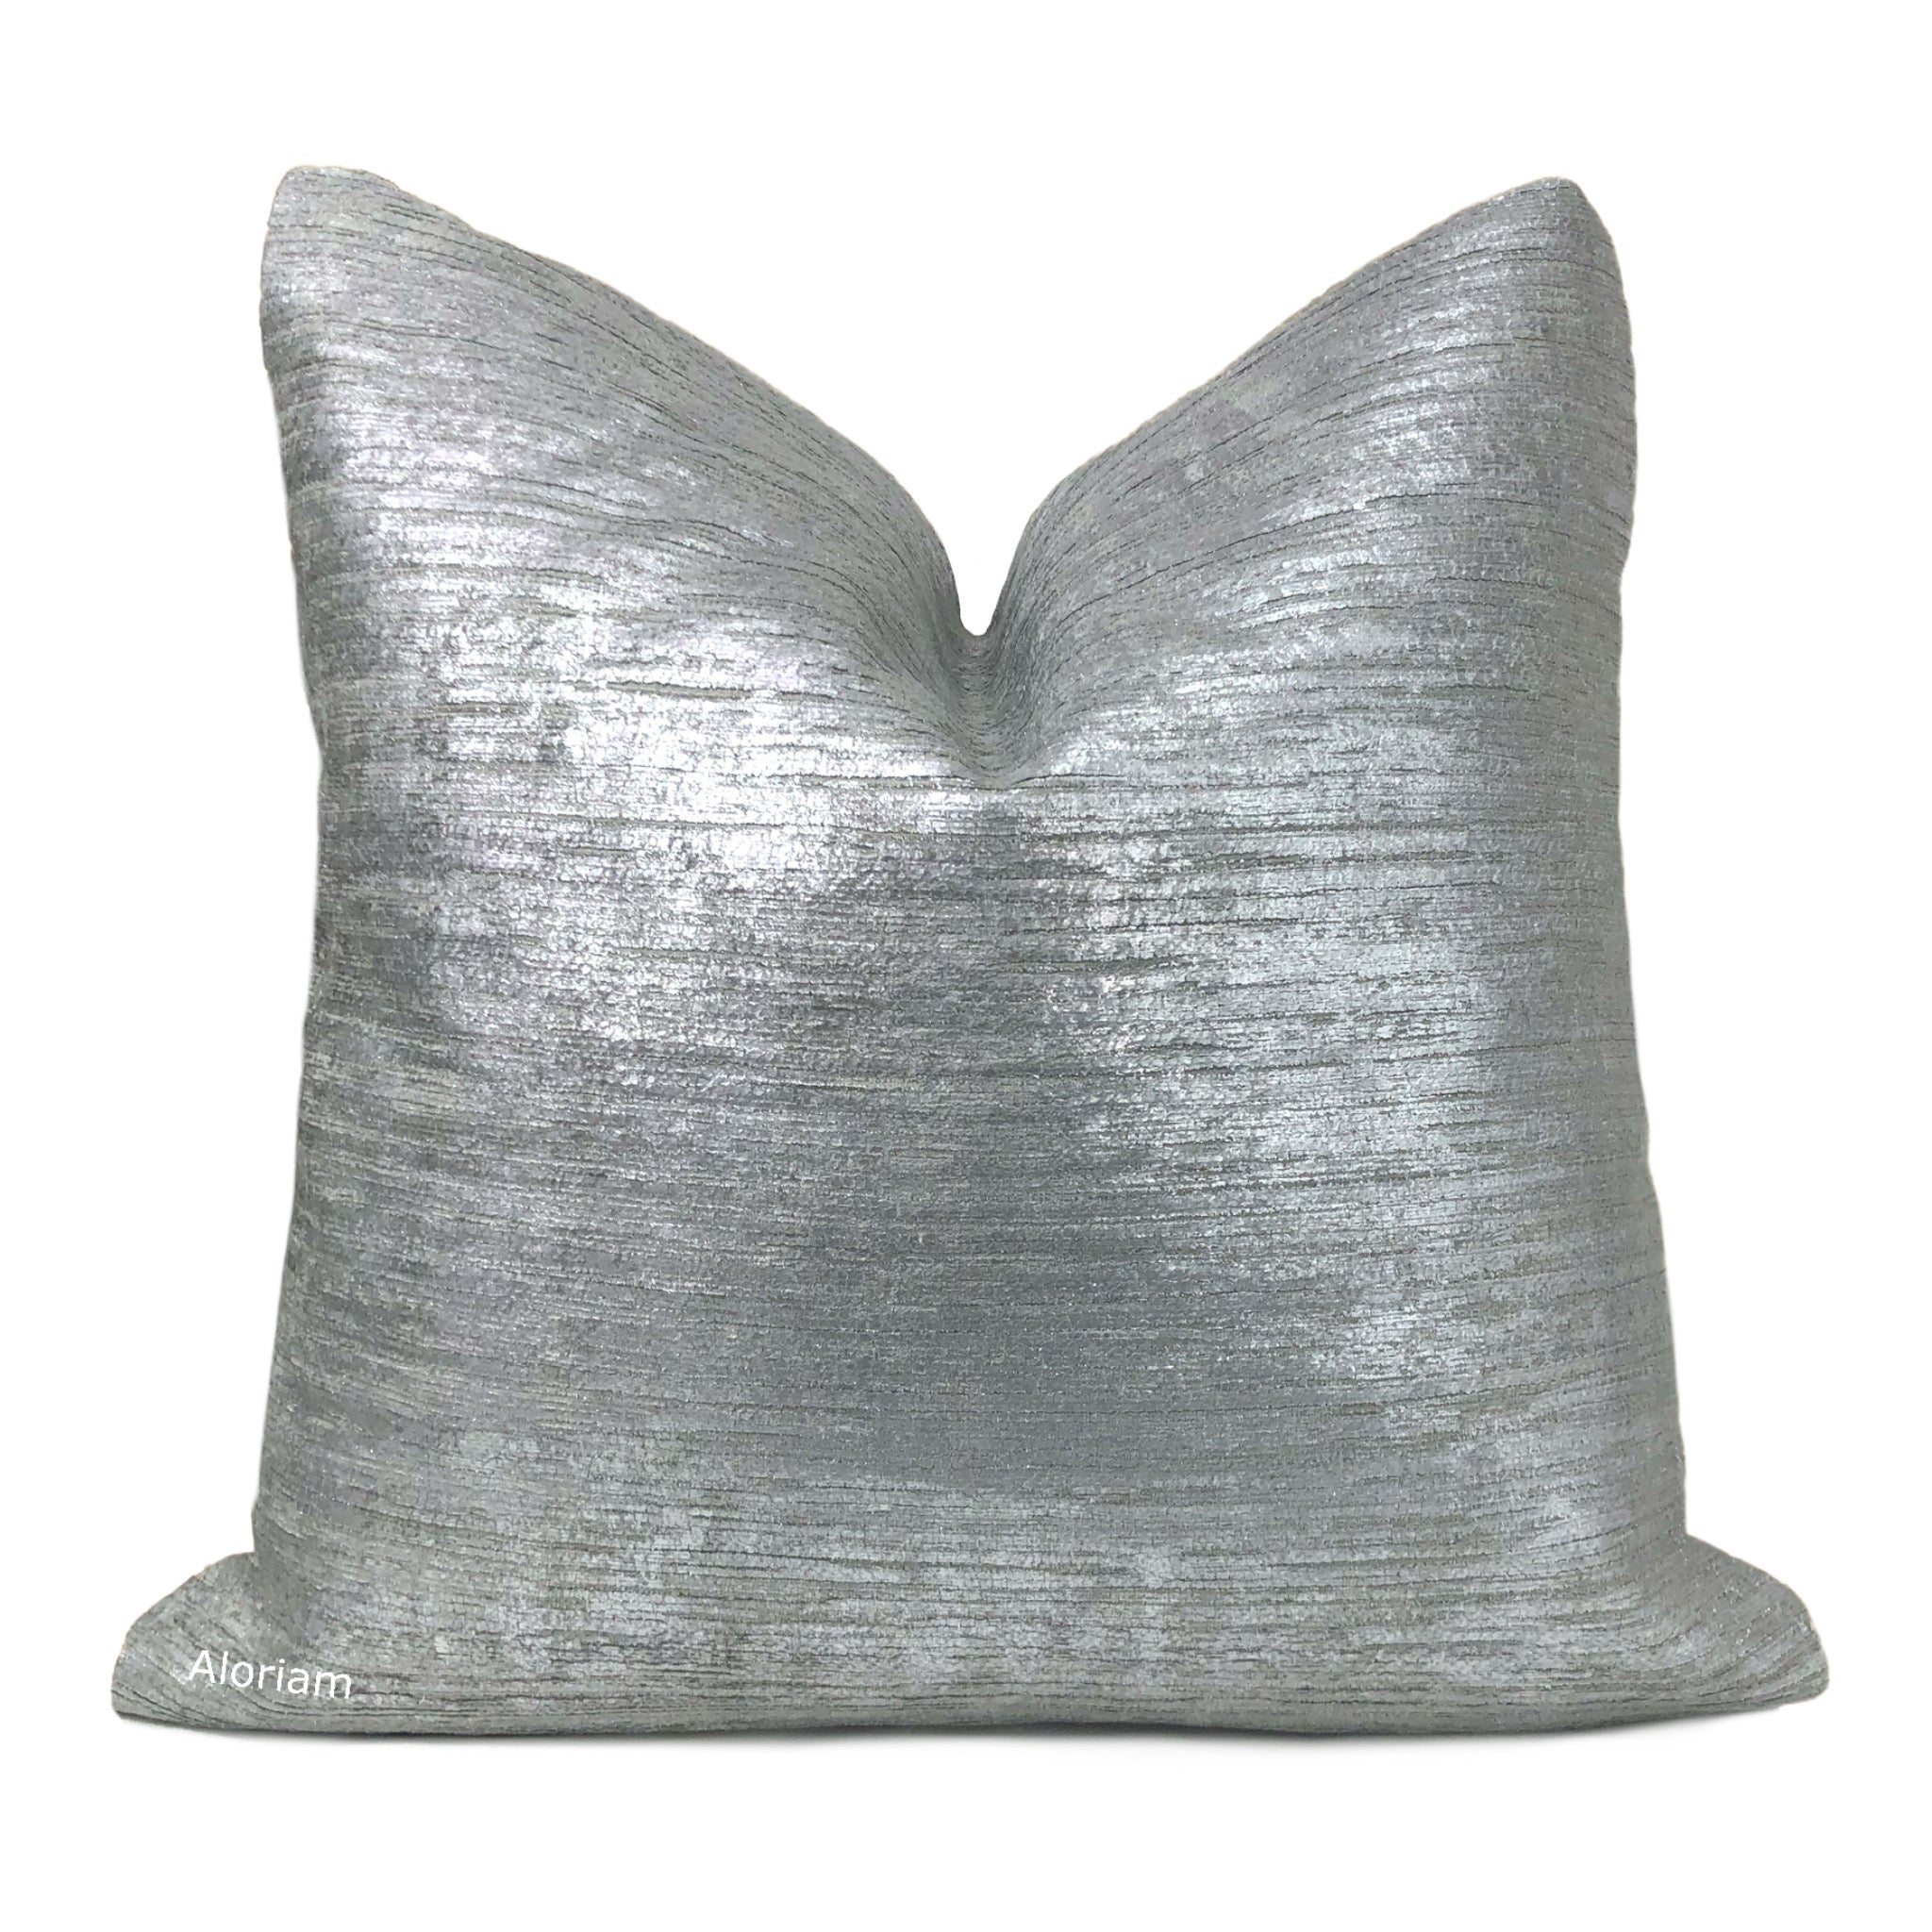 Luna I Metallic Silver Gray Pillow Cover